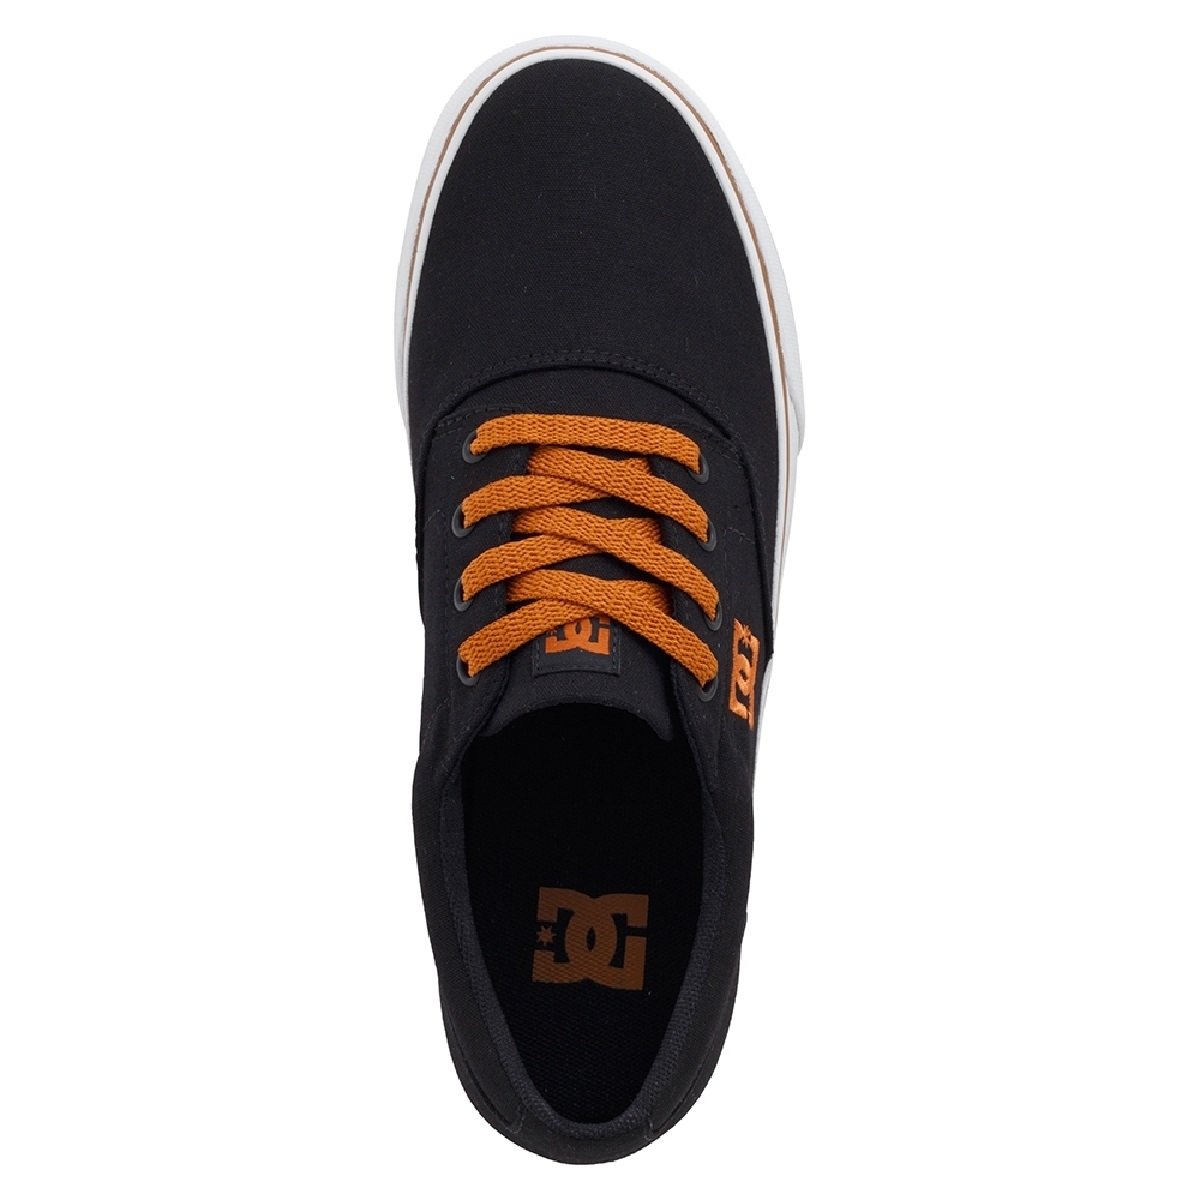 Tênis DC Shoes New Flash 2 TX Masculino - Preto e Marrom Preto 3